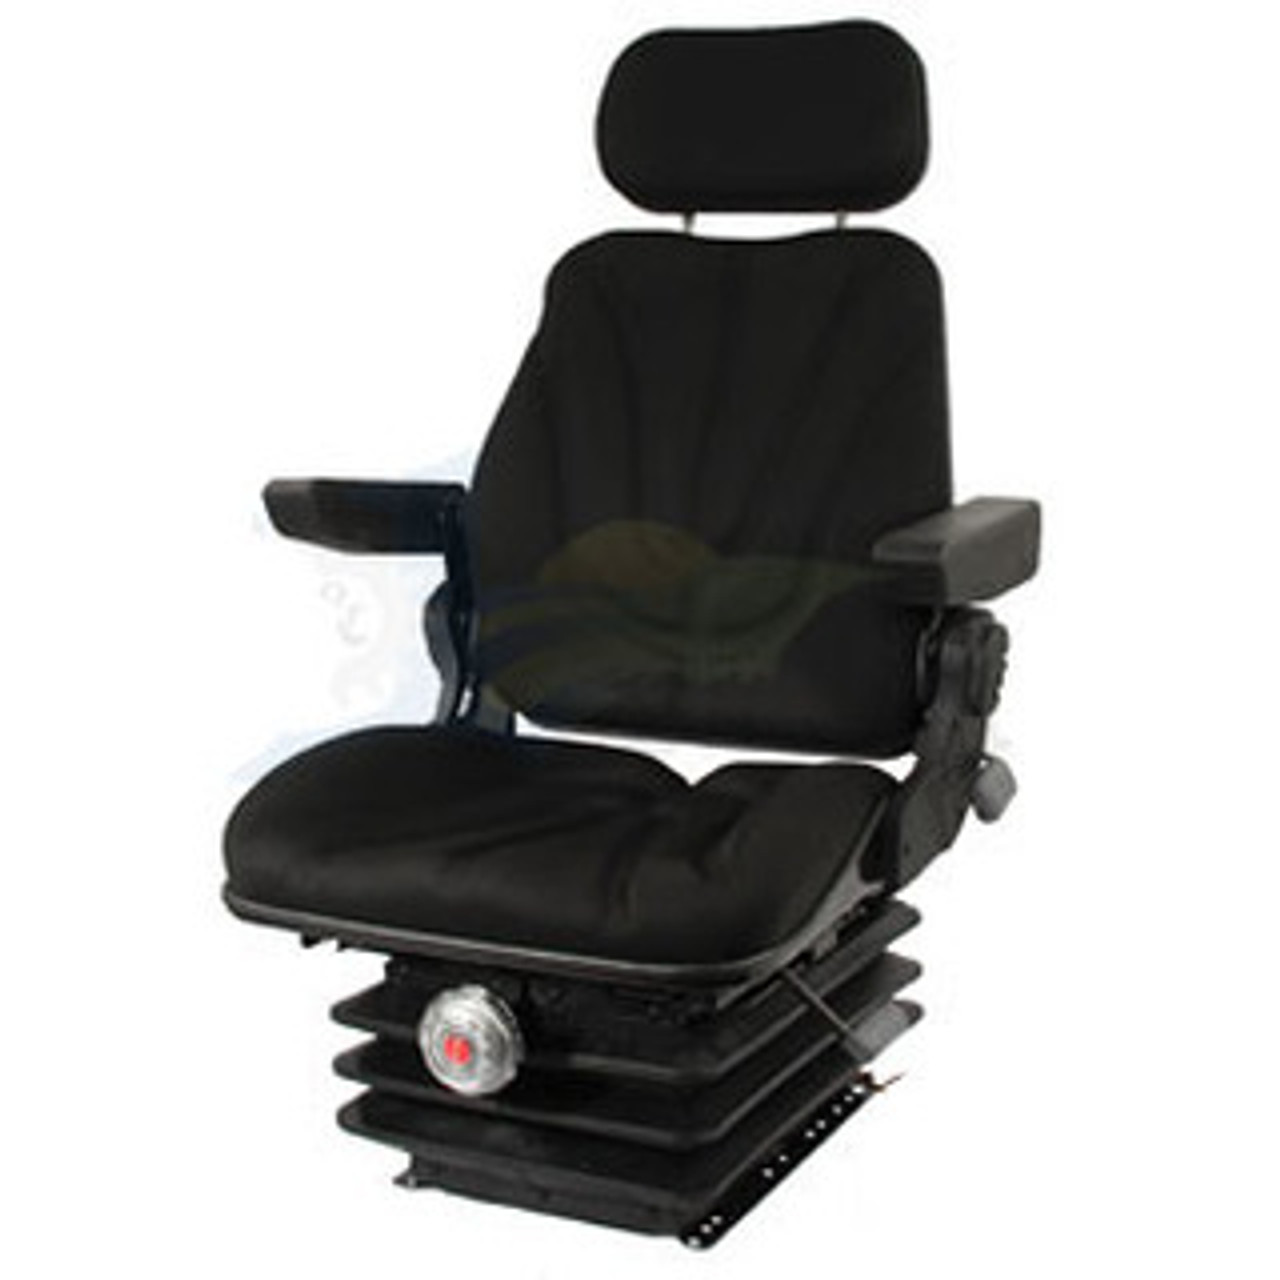 Versatile Tractor Seat A-F10M240 F10 Series, Mechanical Suspension / Armrest / Headrest / Black Cloth